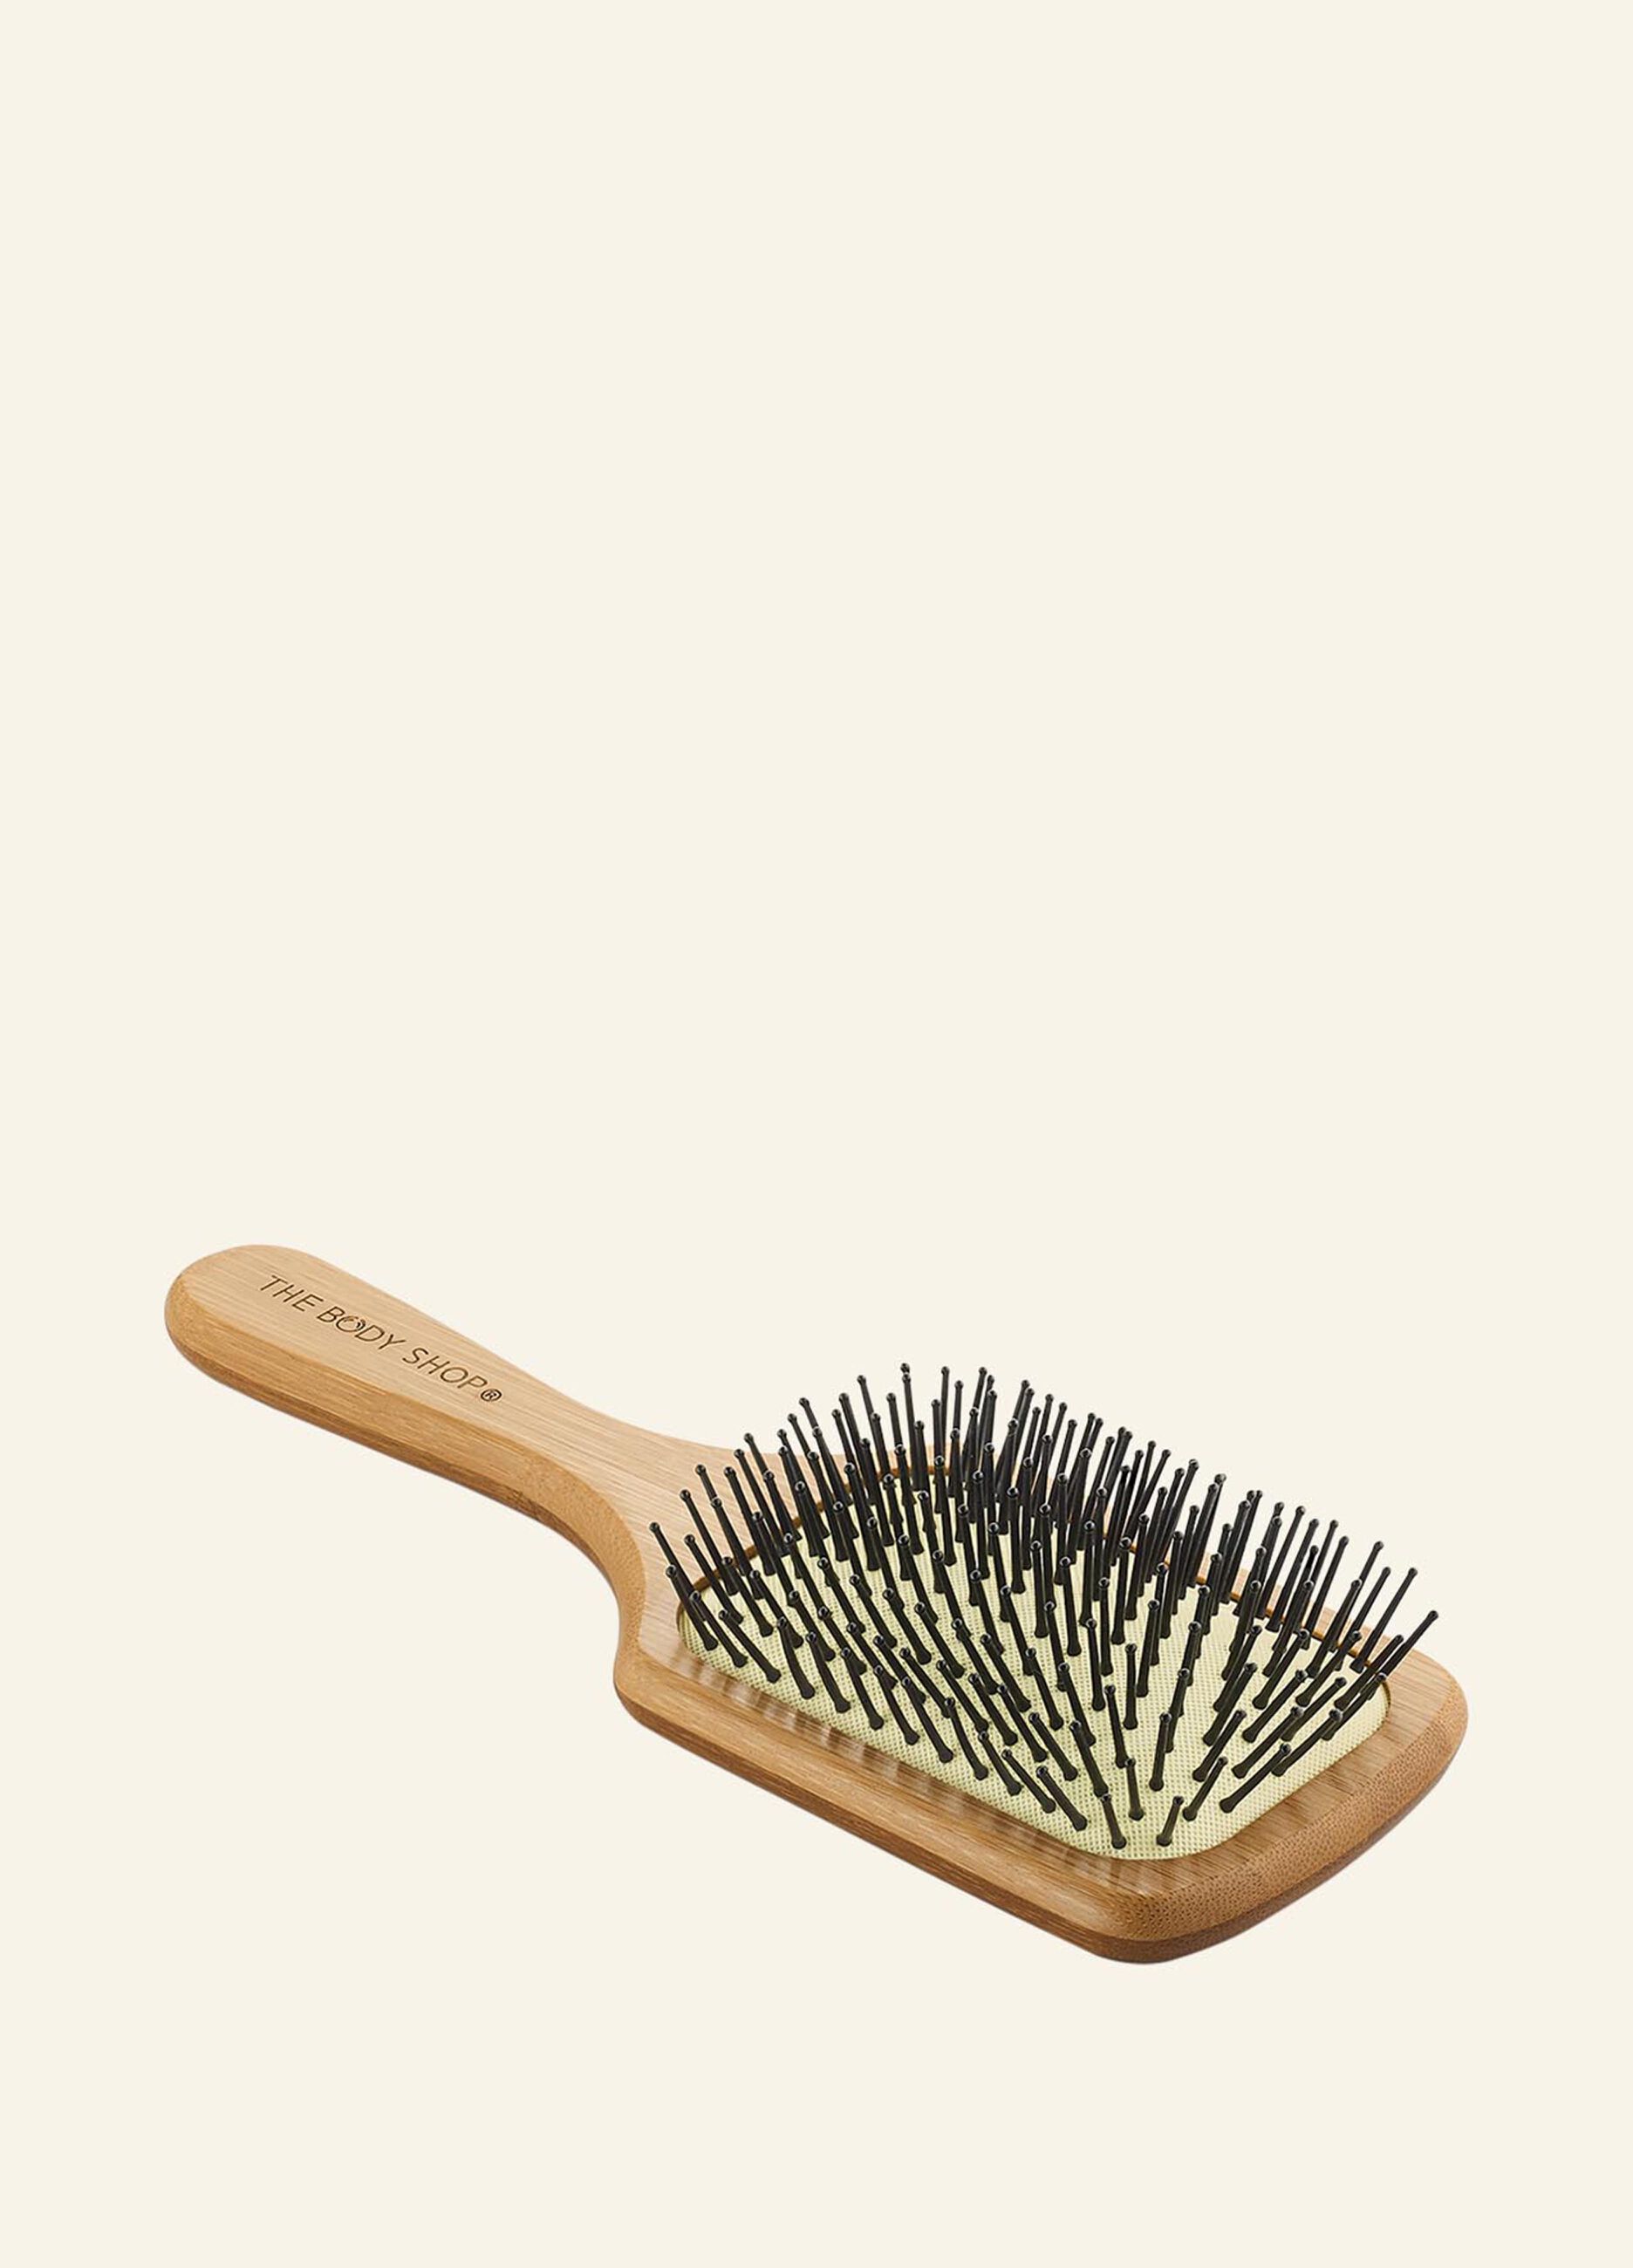 The Body Shop large bamboo hair brush